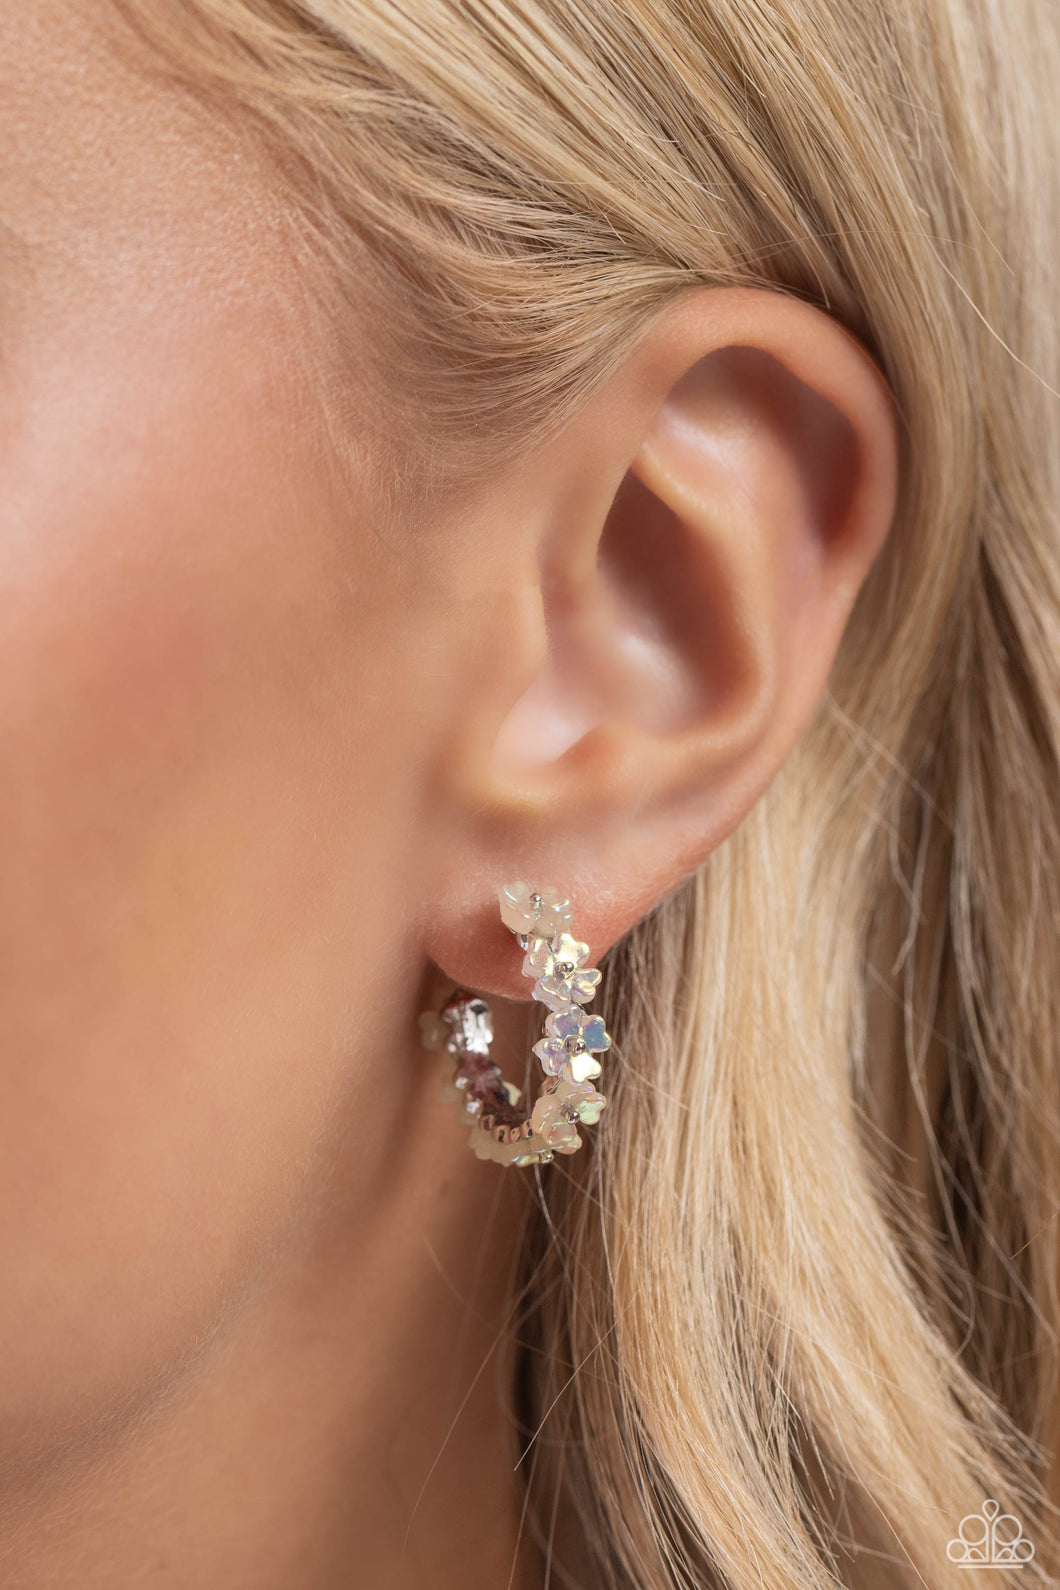 Floral Focus White Earrings - Jewelry by Bretta